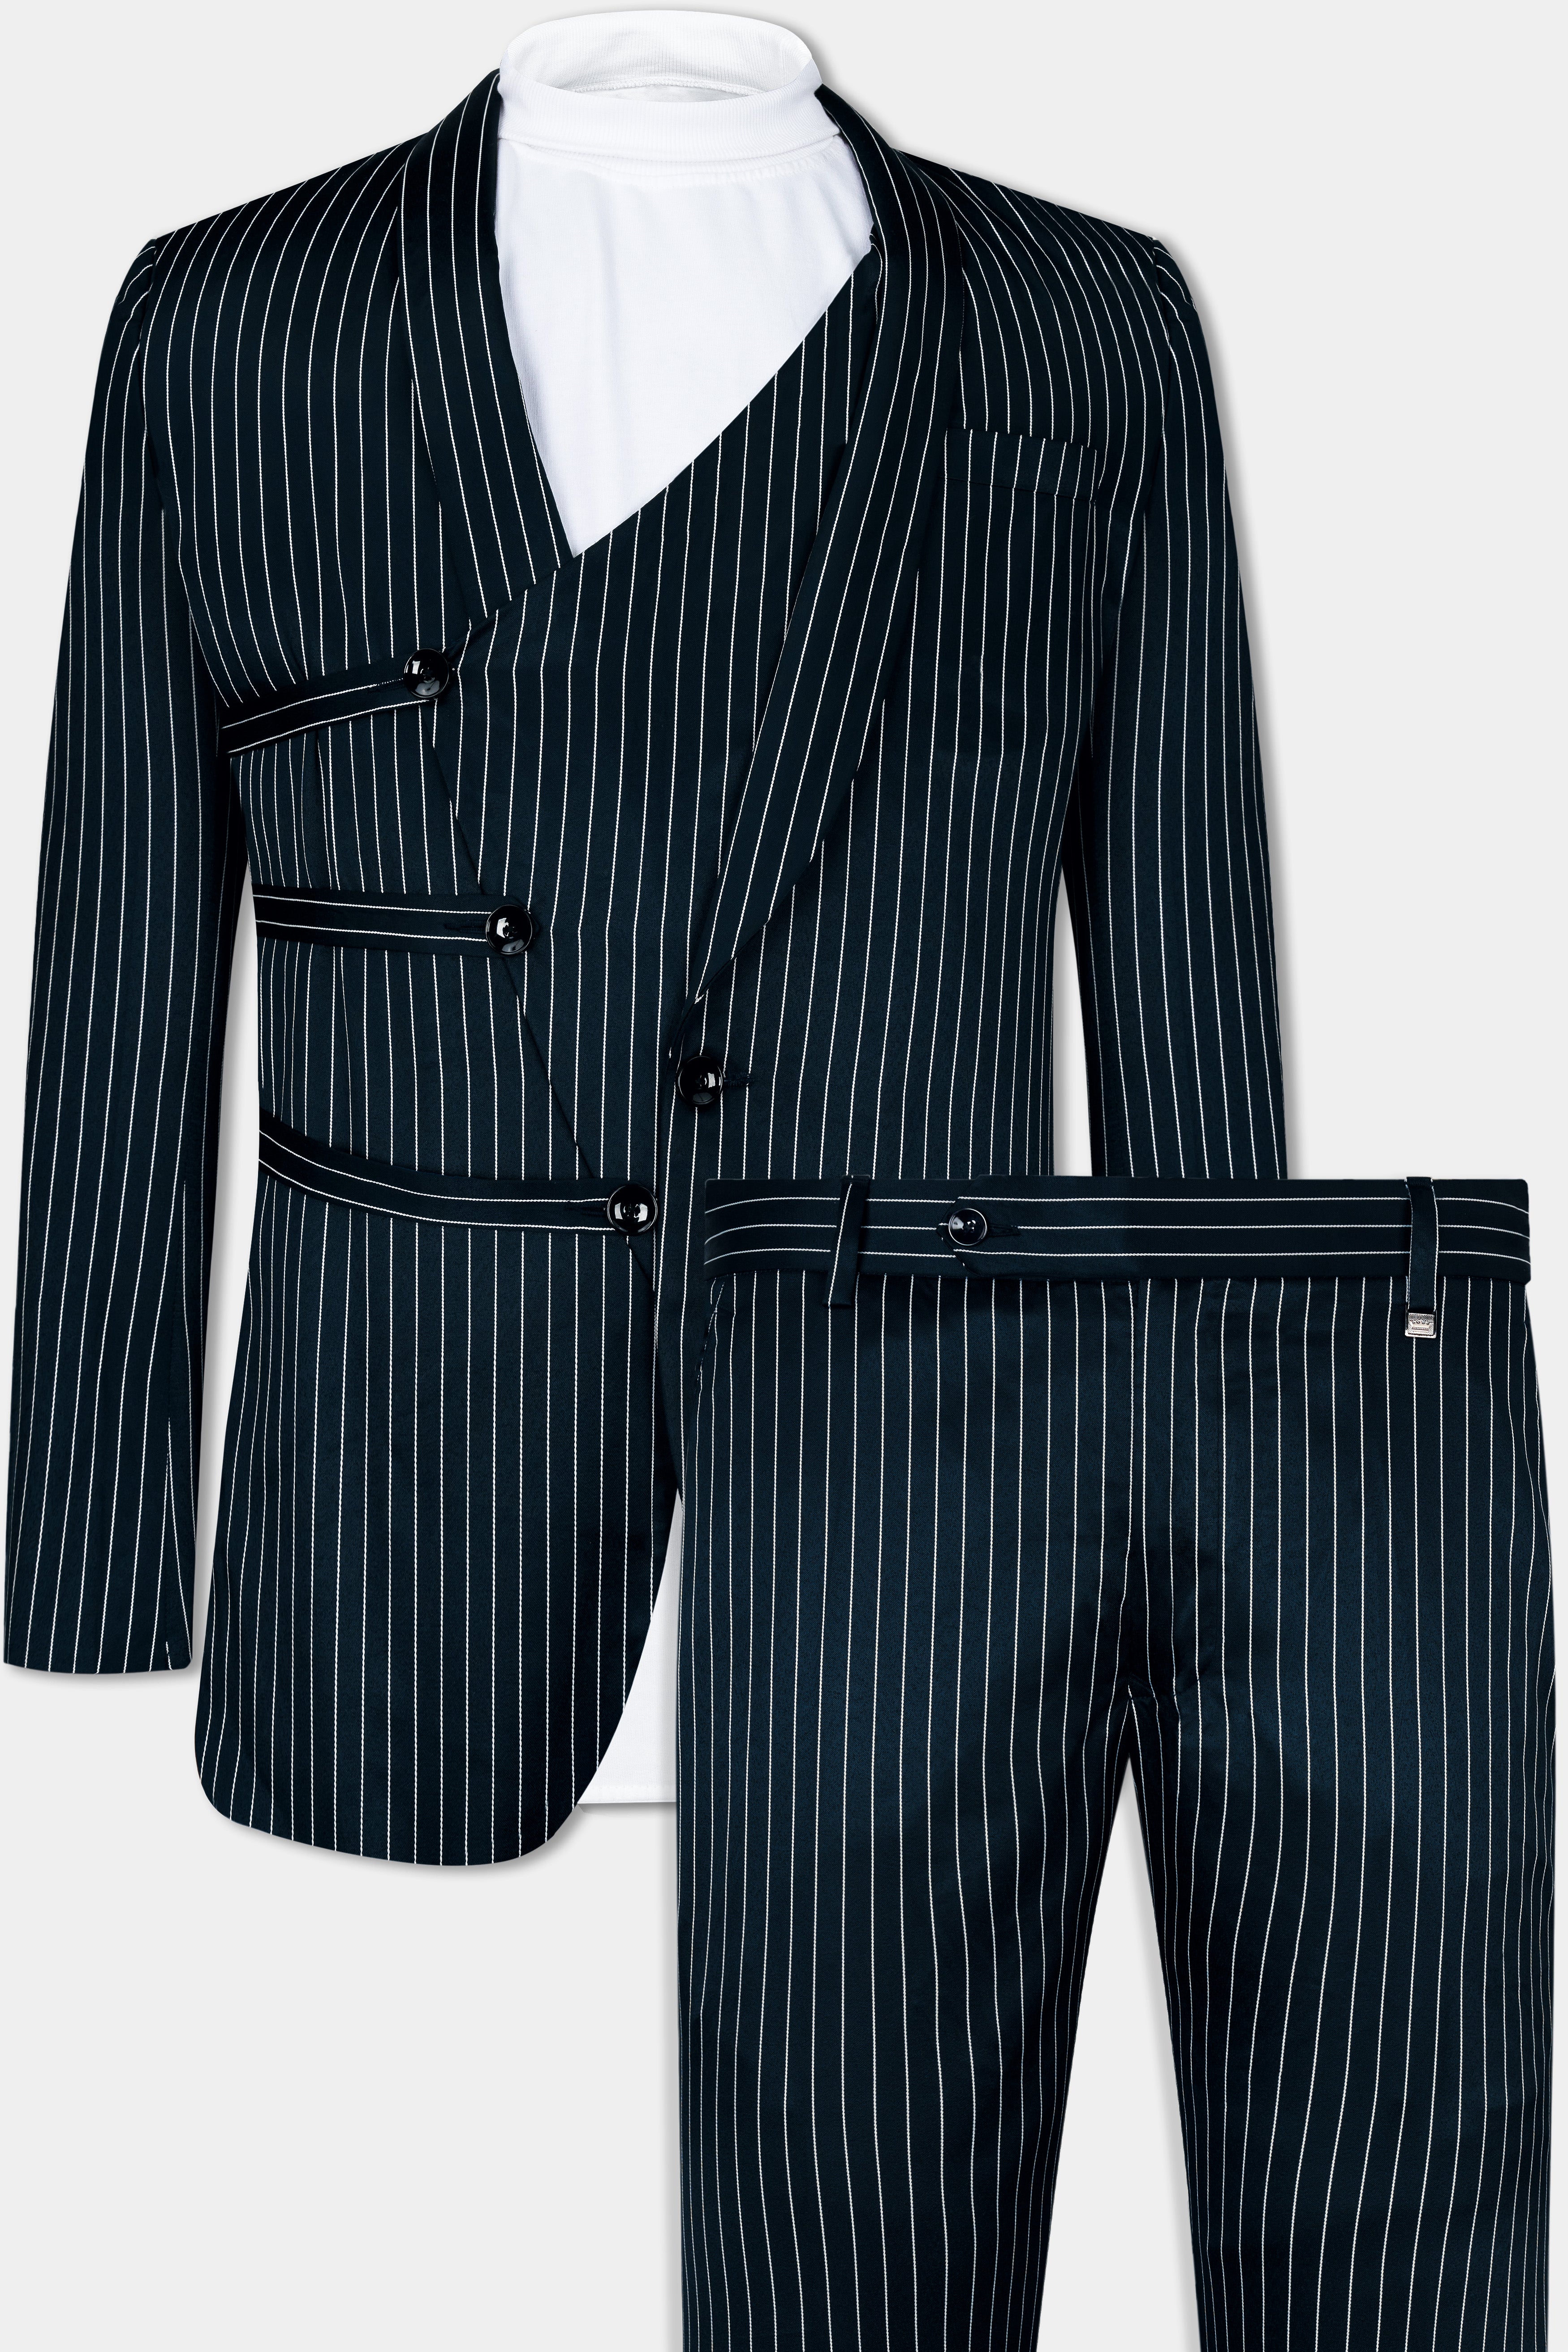 Gunmetal Blue with White Striped Premium Wool Rich Designer Suit ST2772-DB-D481-36,ST2772-DB-D481-38,ST2772-DB-D481-40,ST2772-DB-D481-42,ST2772-DB-D481-44,ST2772-DB-D481-46,ST2772-DB-D481-48,ST2772-DB-D481-50,ST2772-DB-D481-52,ST2772-DB-D481-54,ST2772-DB-D481-56,ST2772-DB-D481-58,ST2772-DB-D481-60